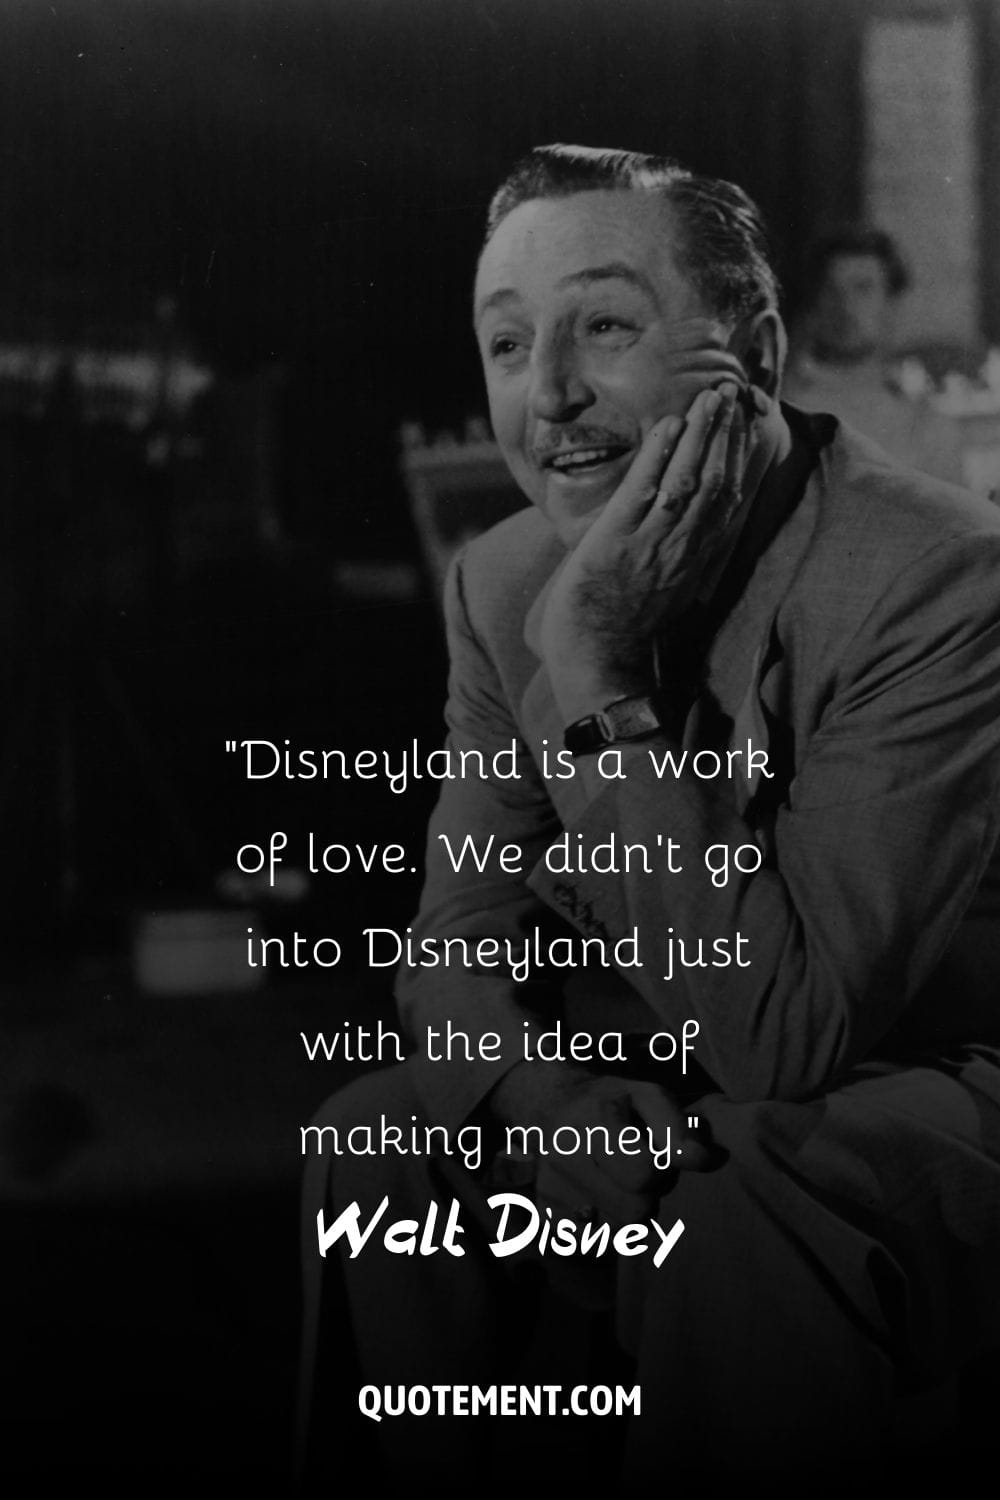 Heartwarming smile from Walt Disney representing Disneyland quote.